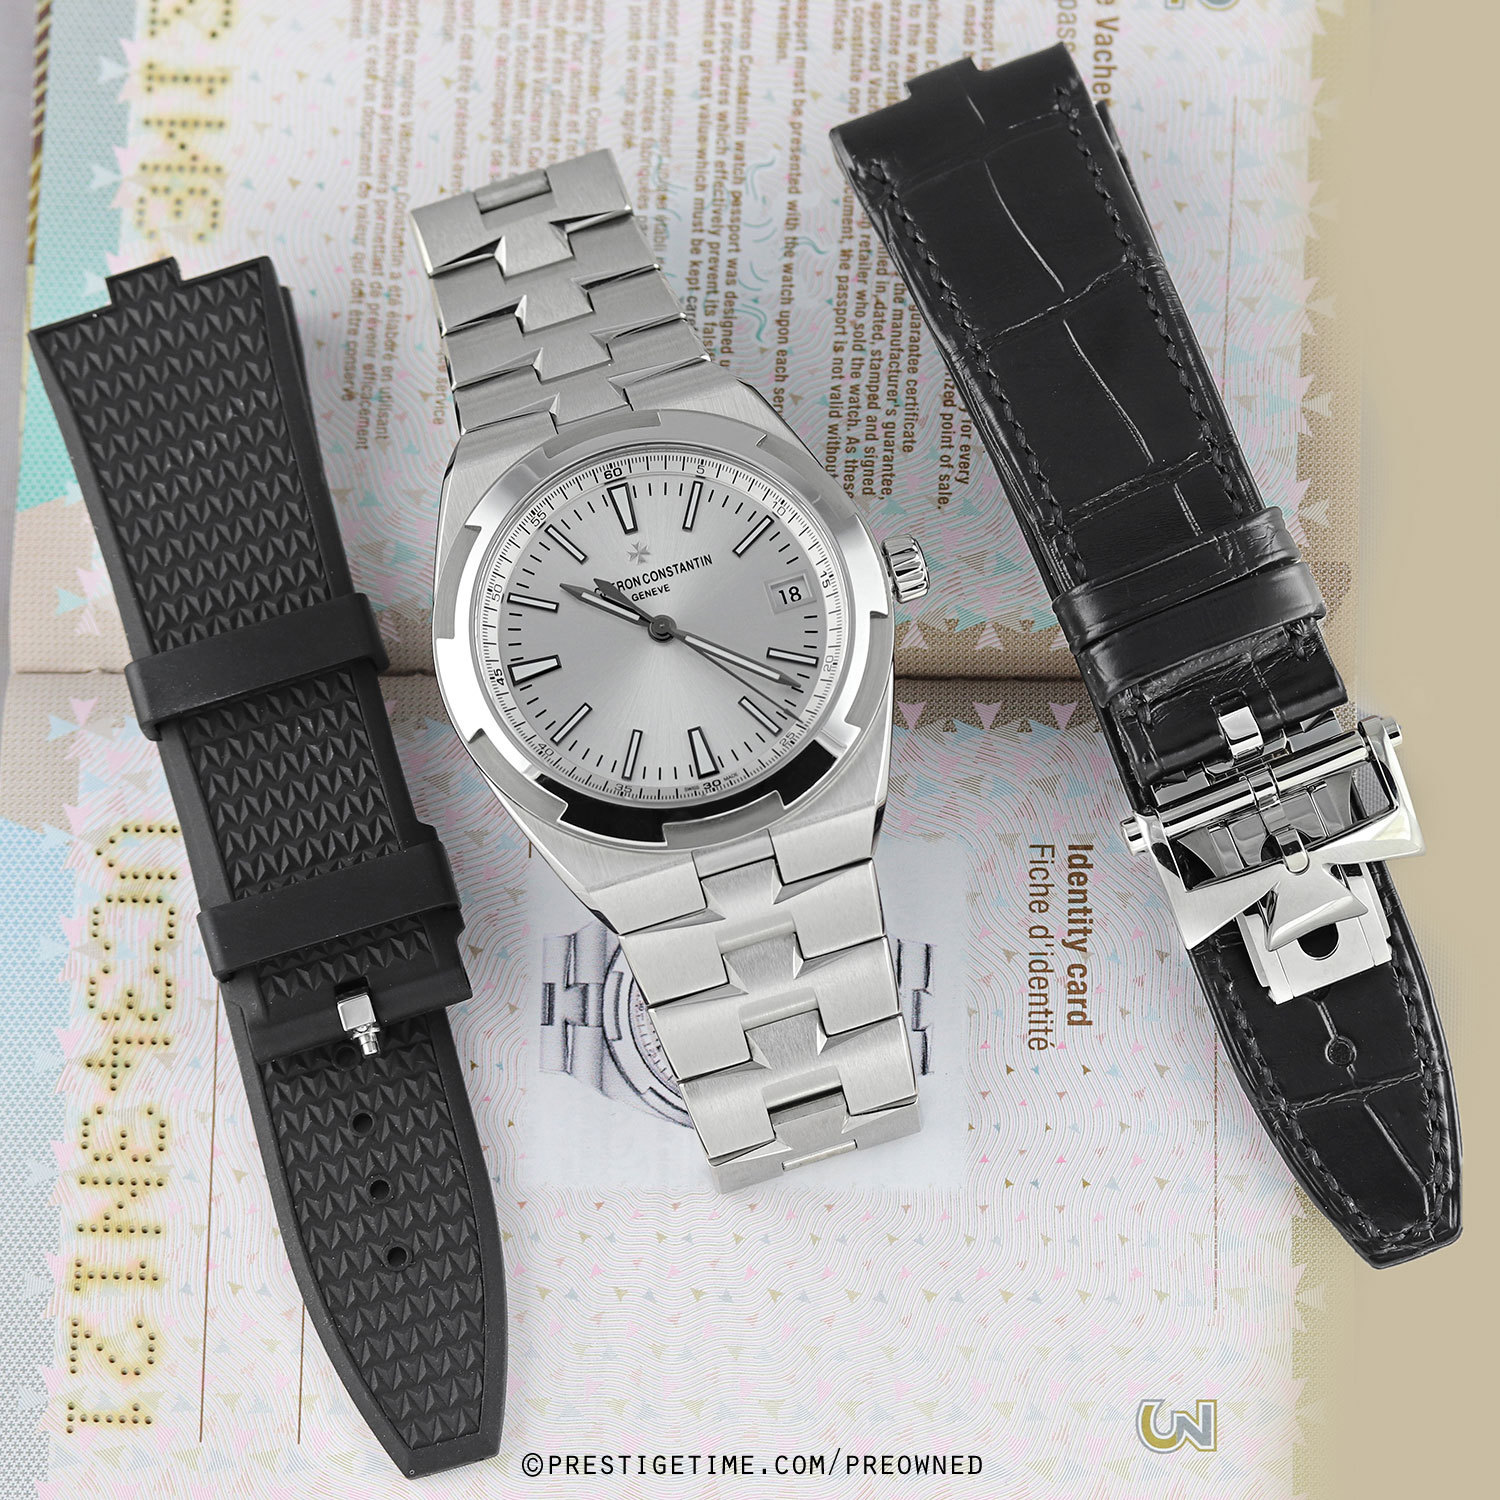 Overseas Certified Pre Owned Watch in Silver - Vacheron Constantin